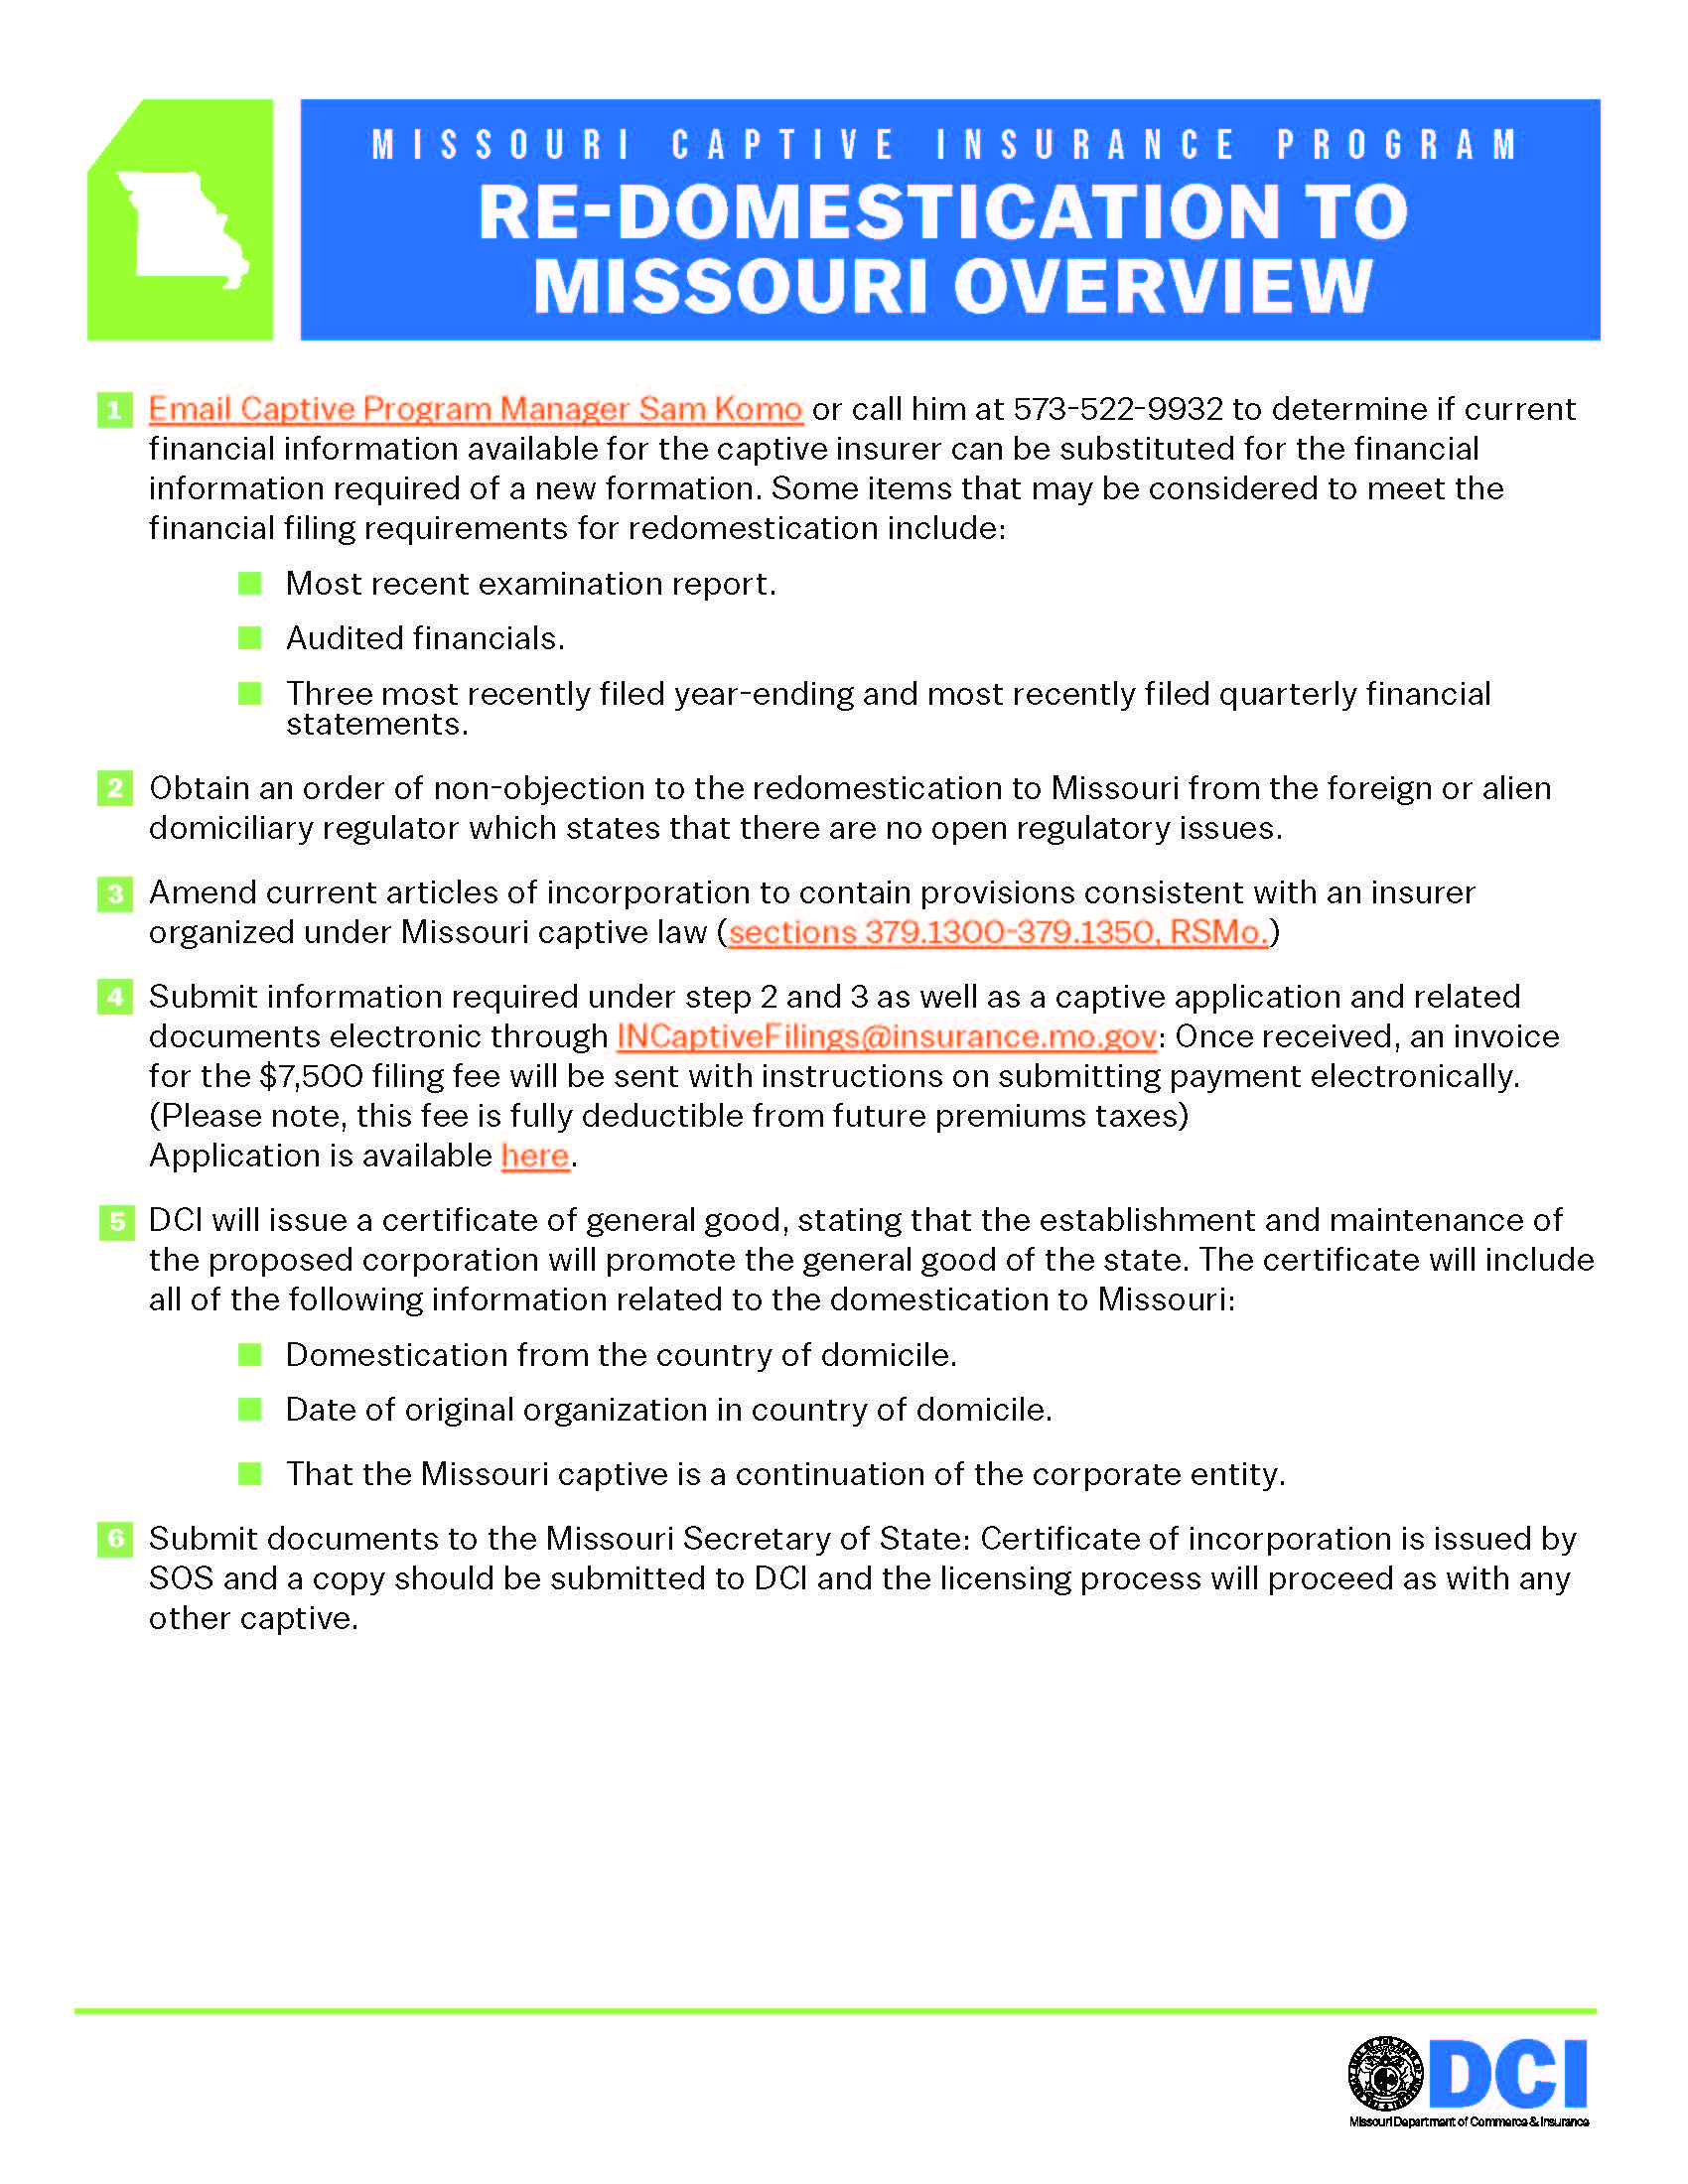 Process to redomesticate to Missouri